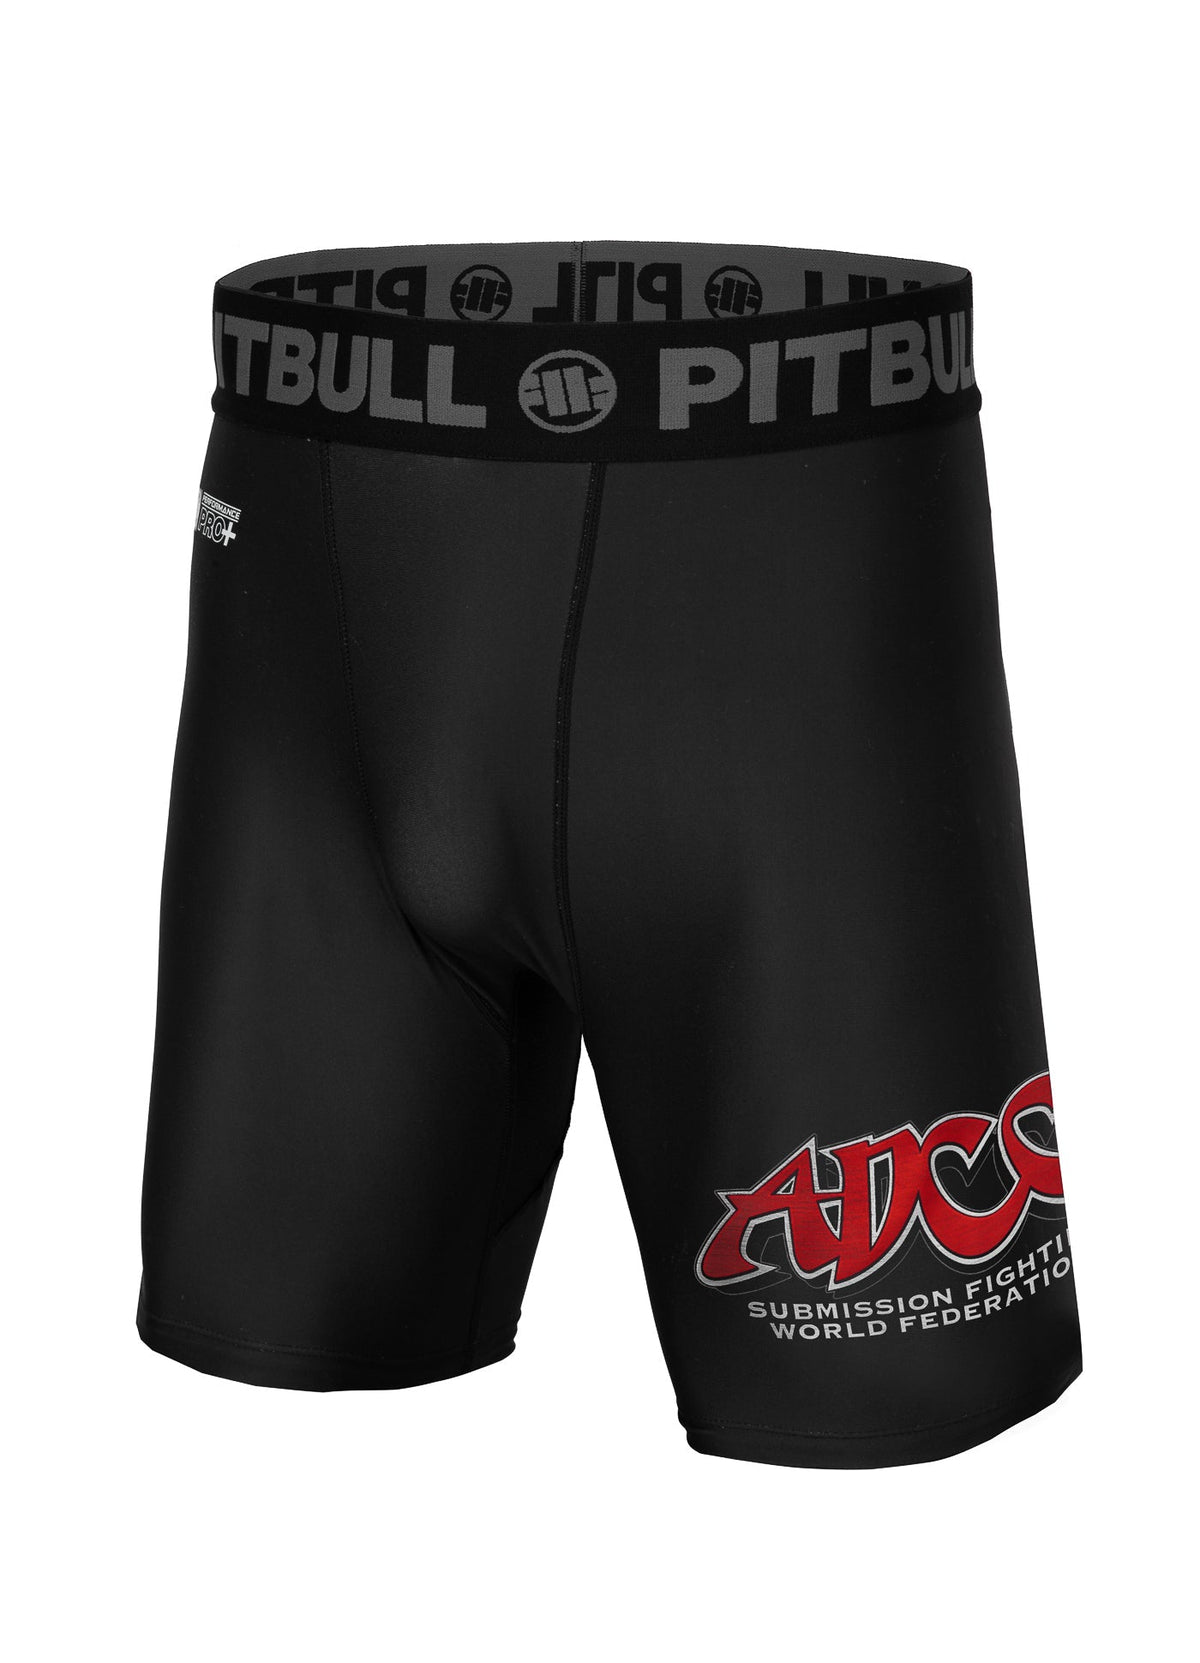 ADCC 2 Black Compression Shorts.